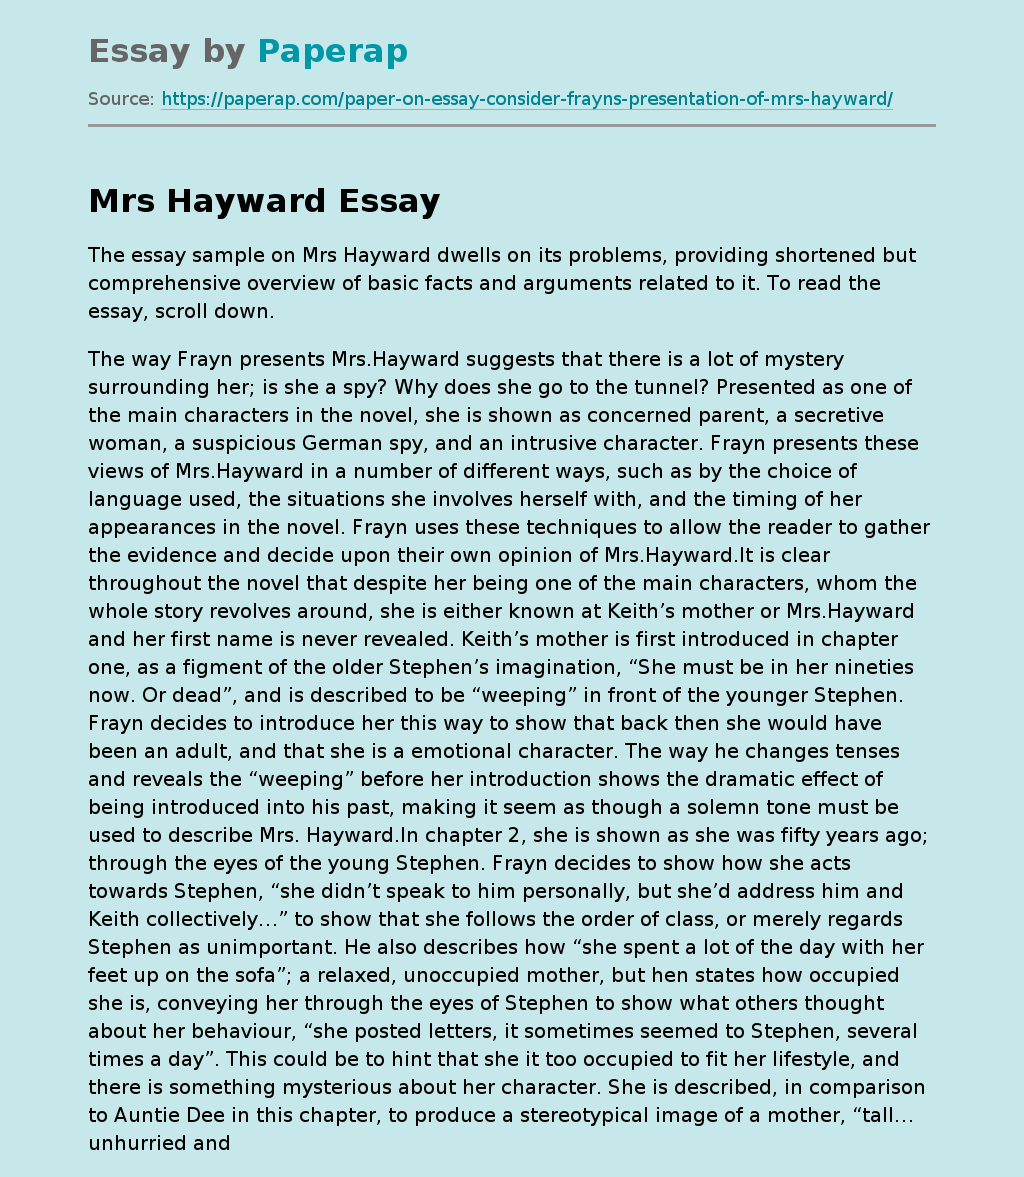 Main Factors and Arguments of Mrs. Hayward